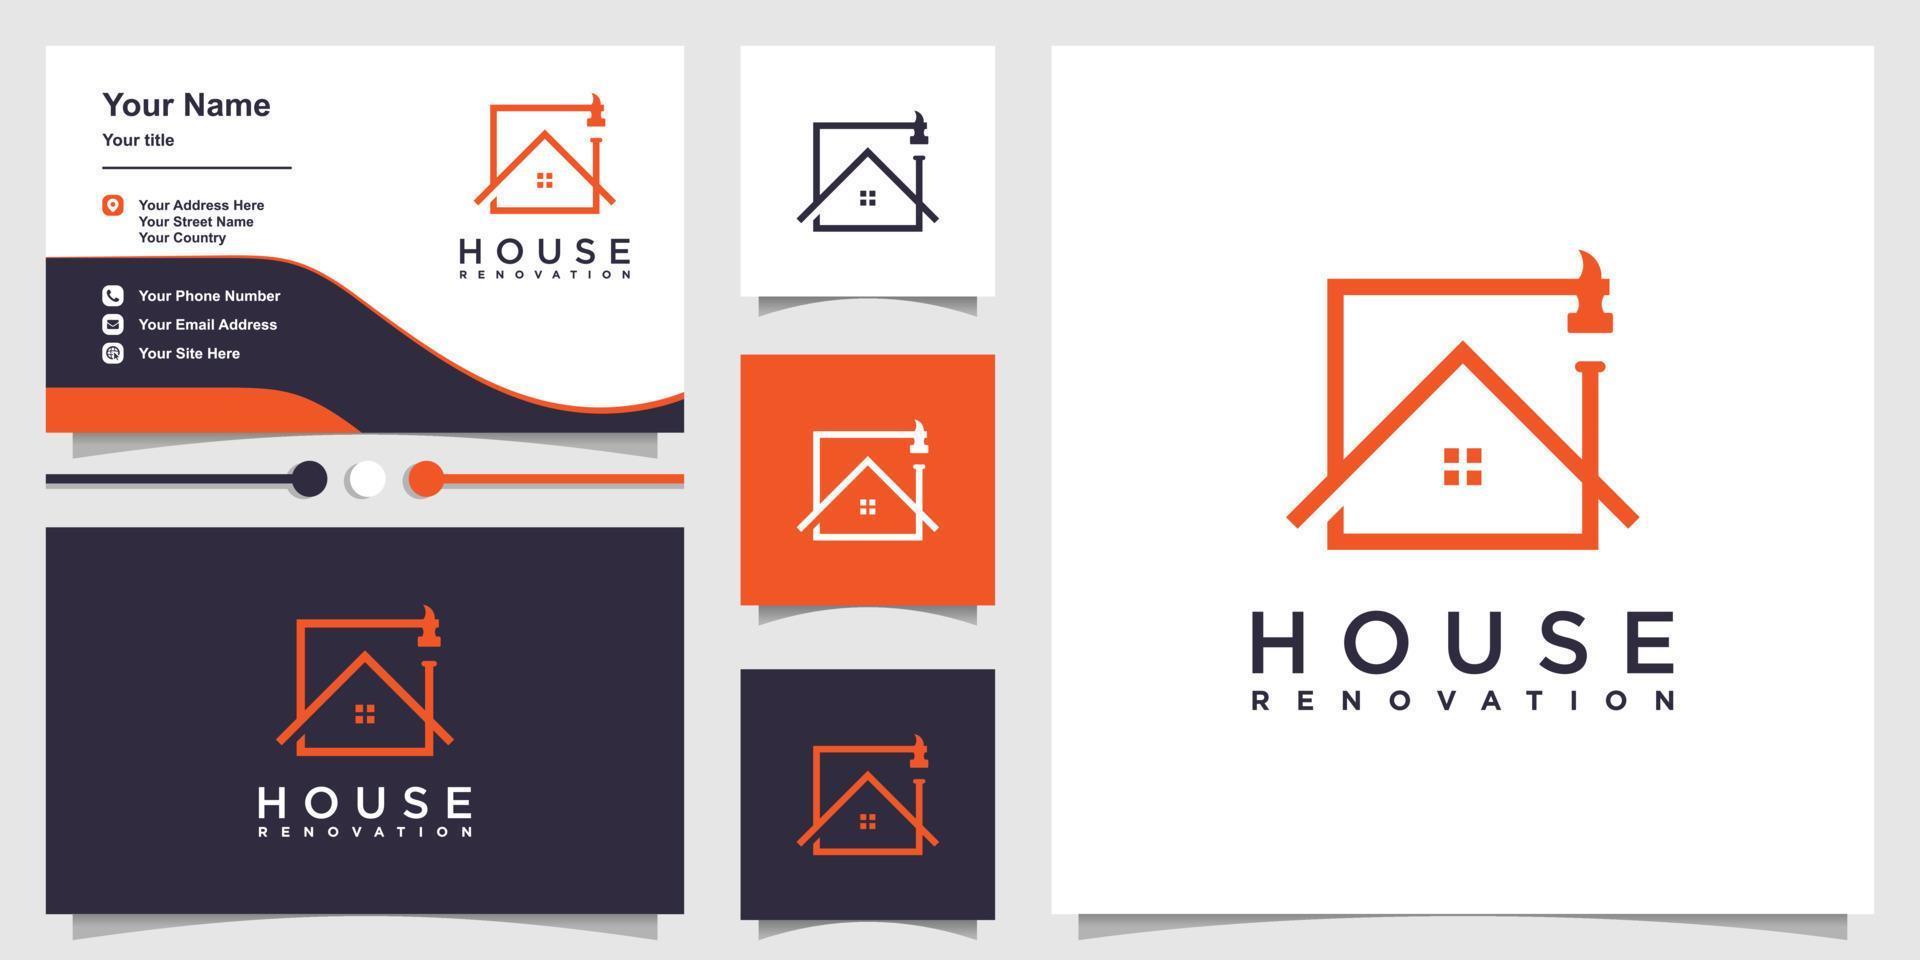 logotipo de renovación del hogar con un concepto creativo, adecuado para empresas de construcción vector premium